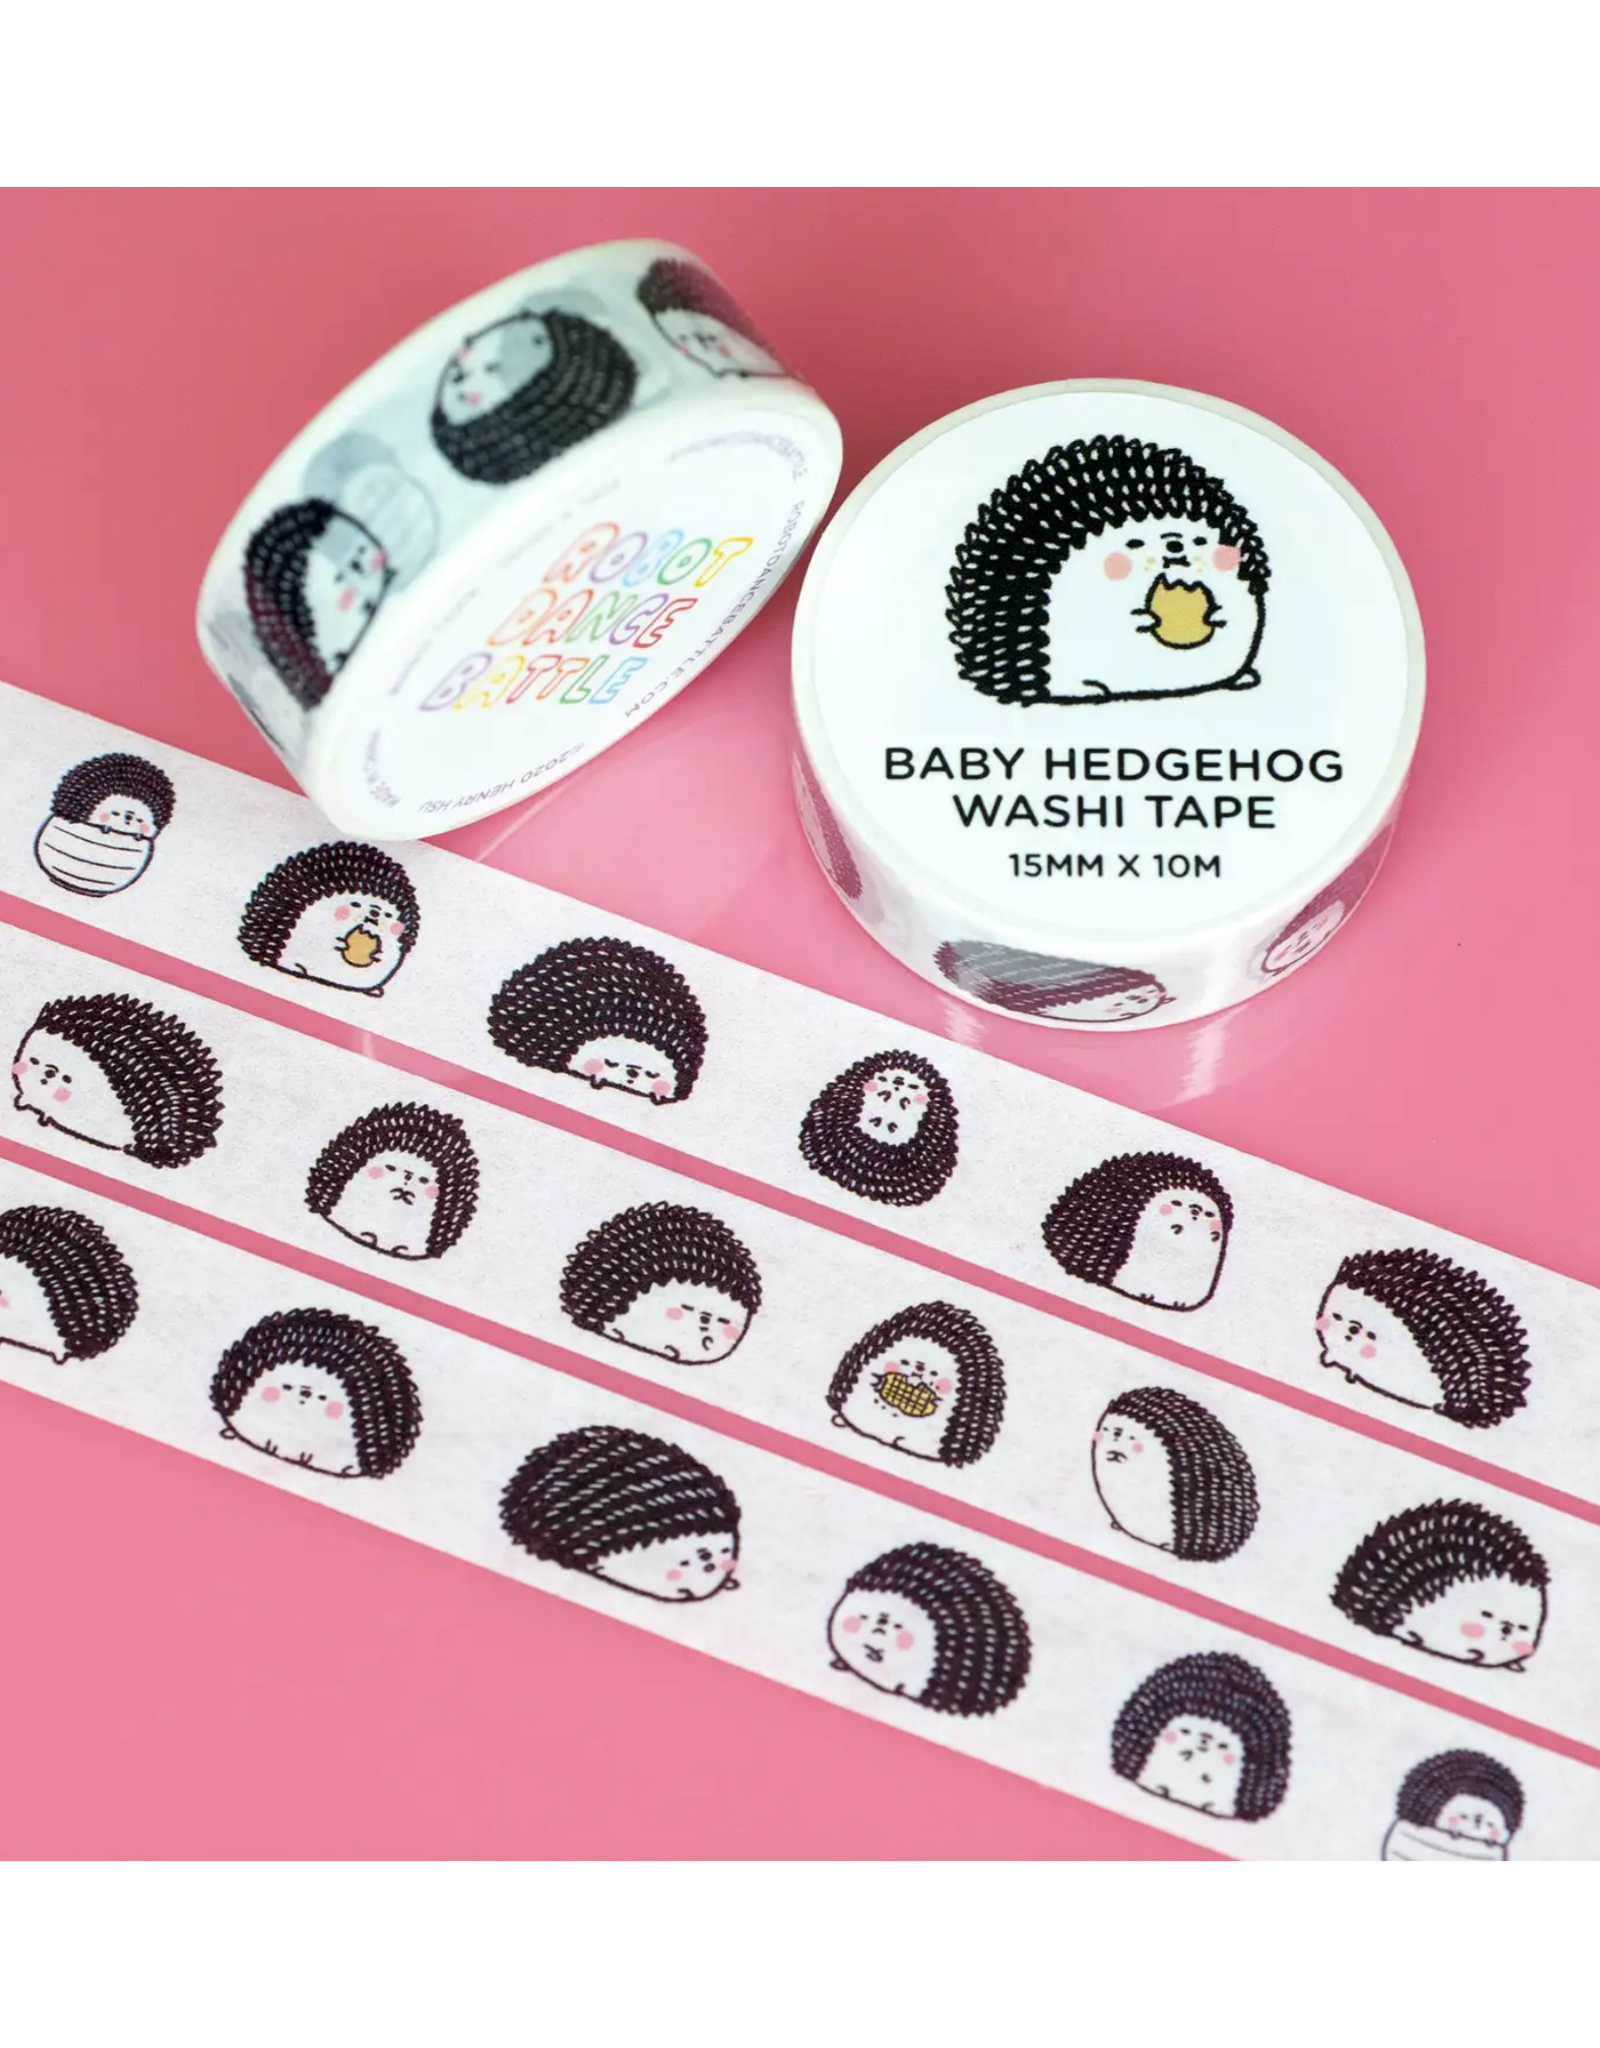 Baby Hedgehog Washi Tape